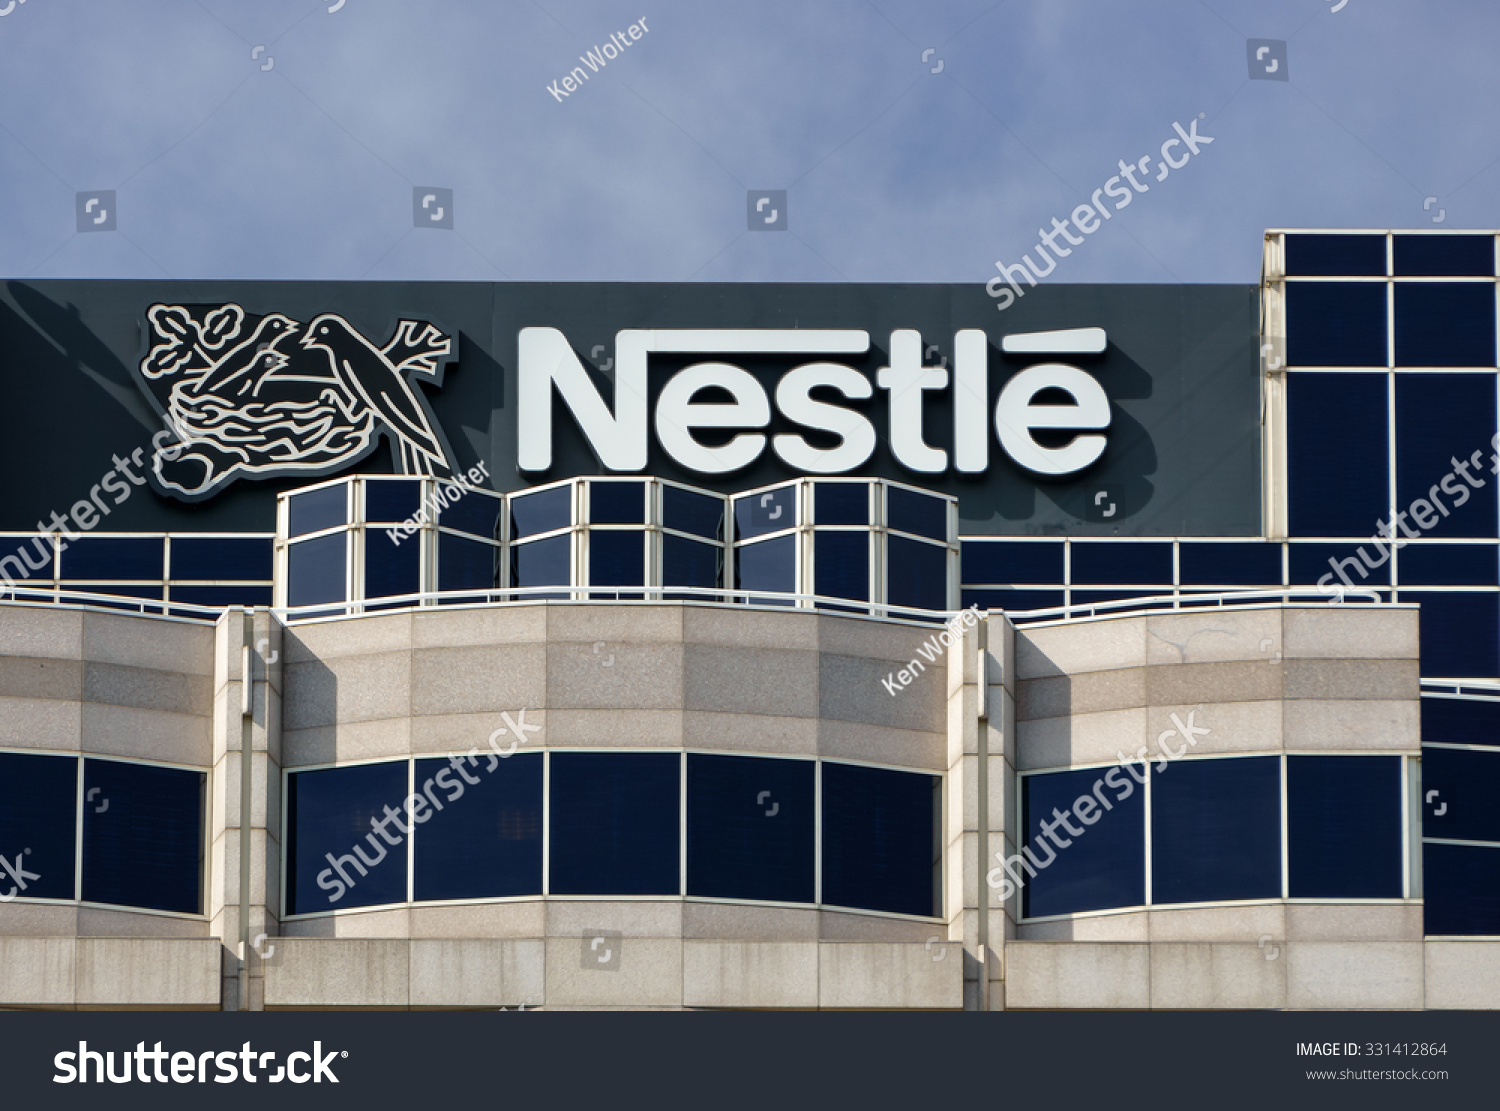 Is nestle a swiss company